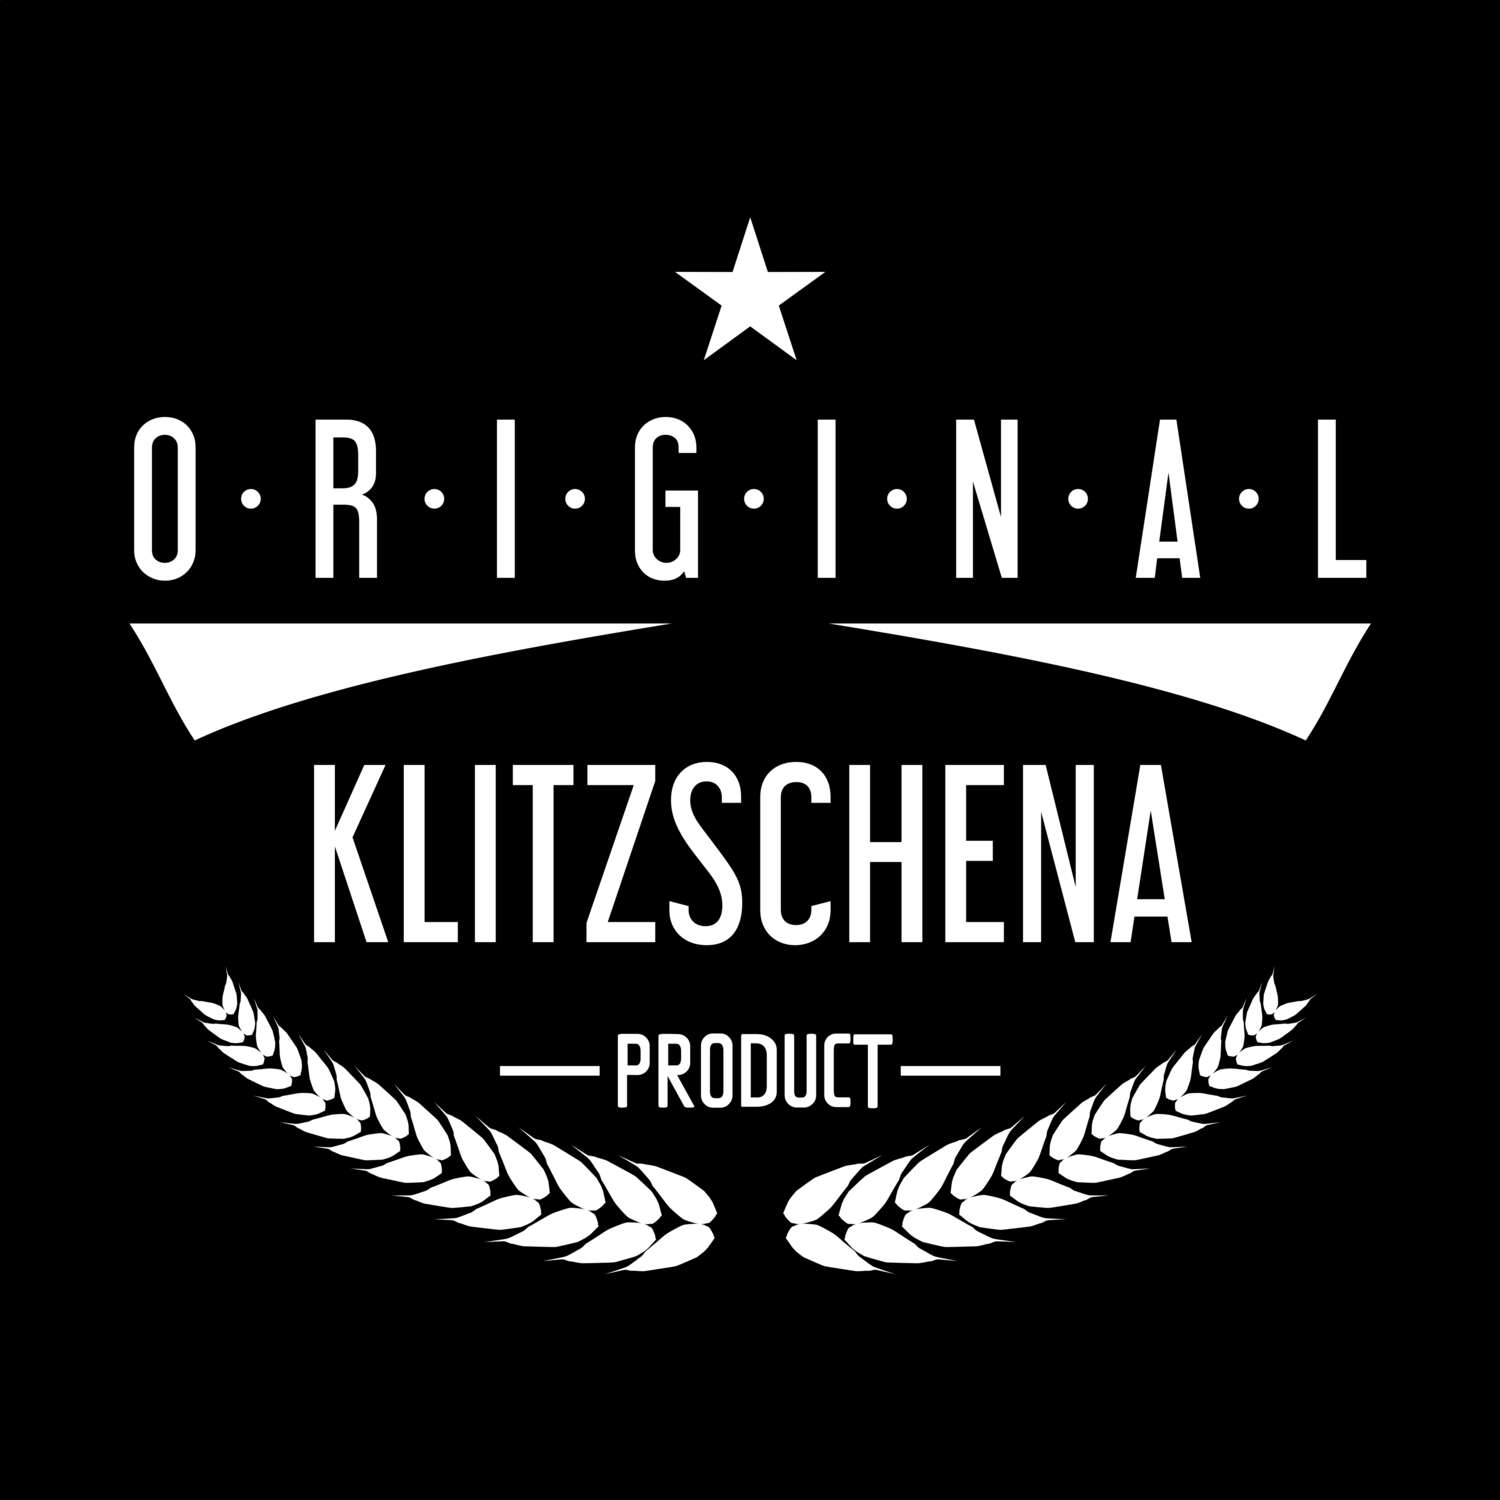 Klitzschena T-Shirt »Original Product«